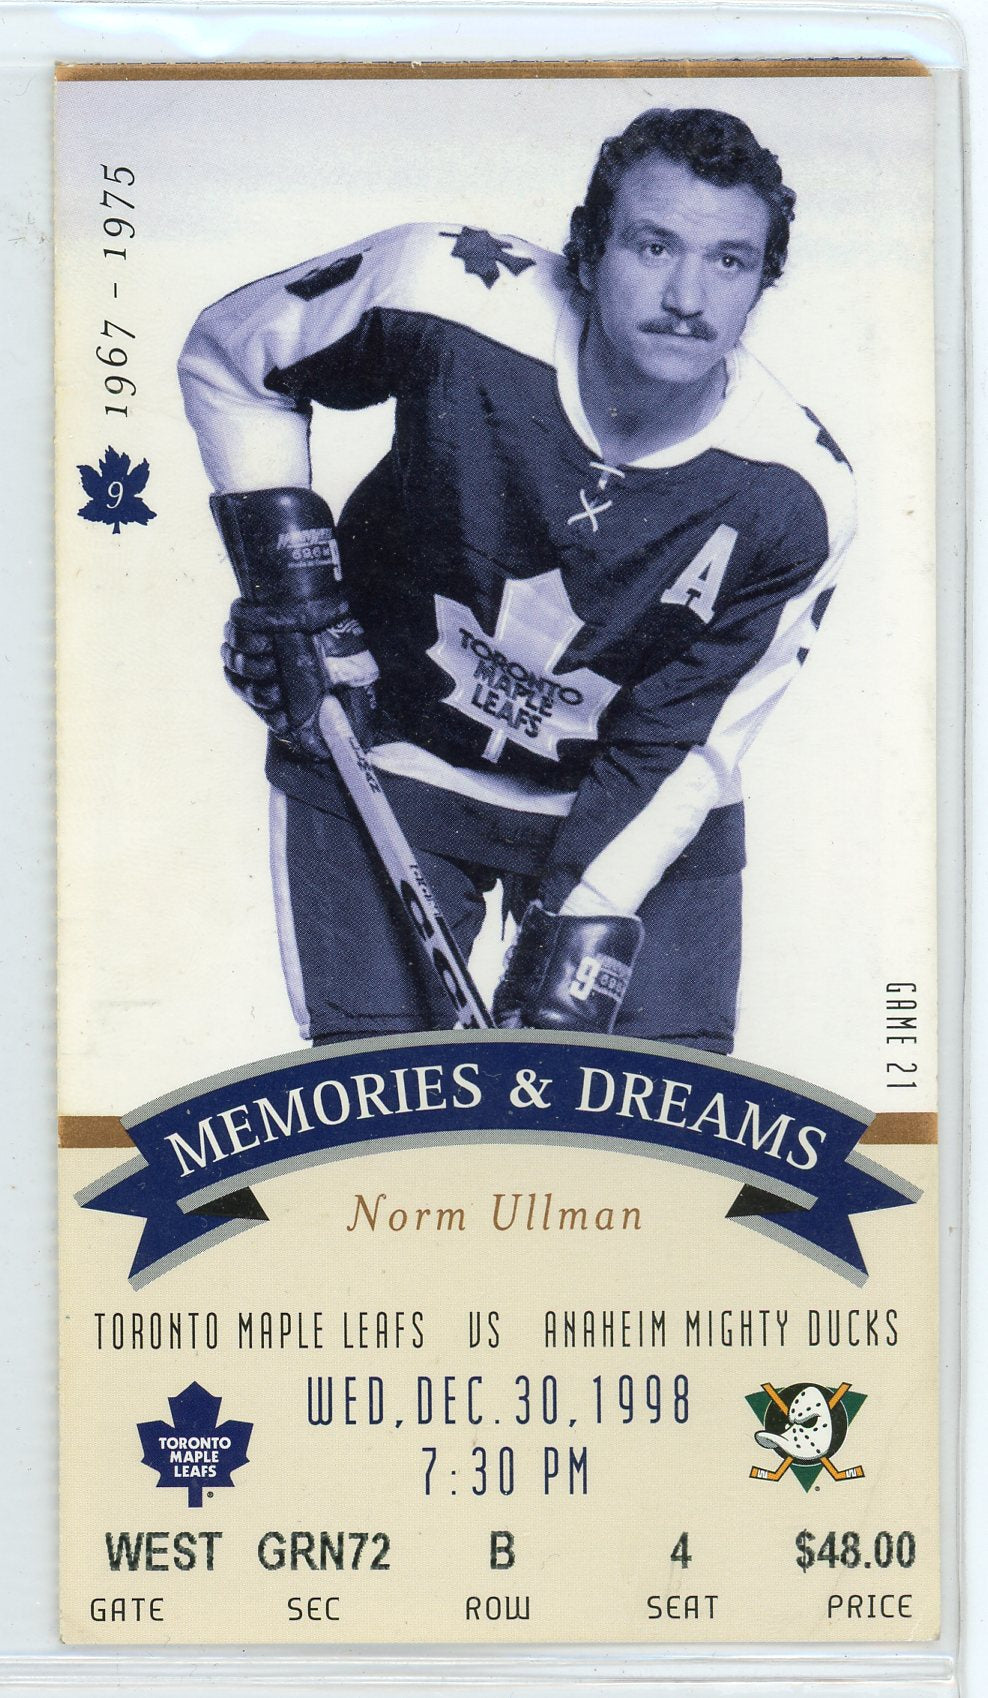 Toronto Maple Leafs vs. Anaheim Mighty Ducks Ticket Stub Maple Leaf Gardens 1998